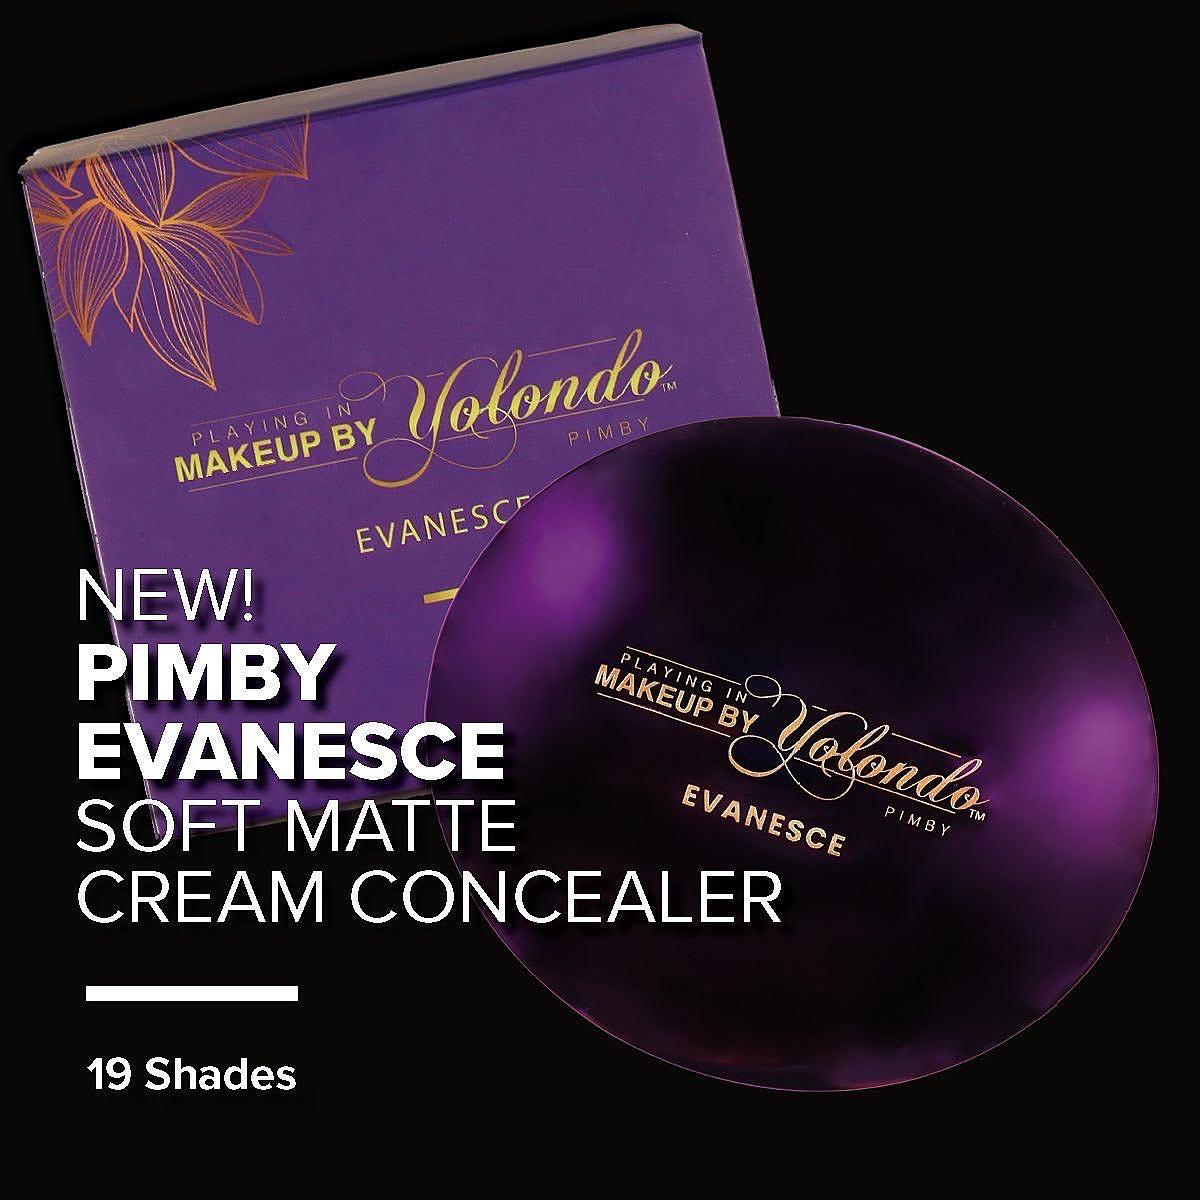 Evanesce Soft Matte Cream Concealer